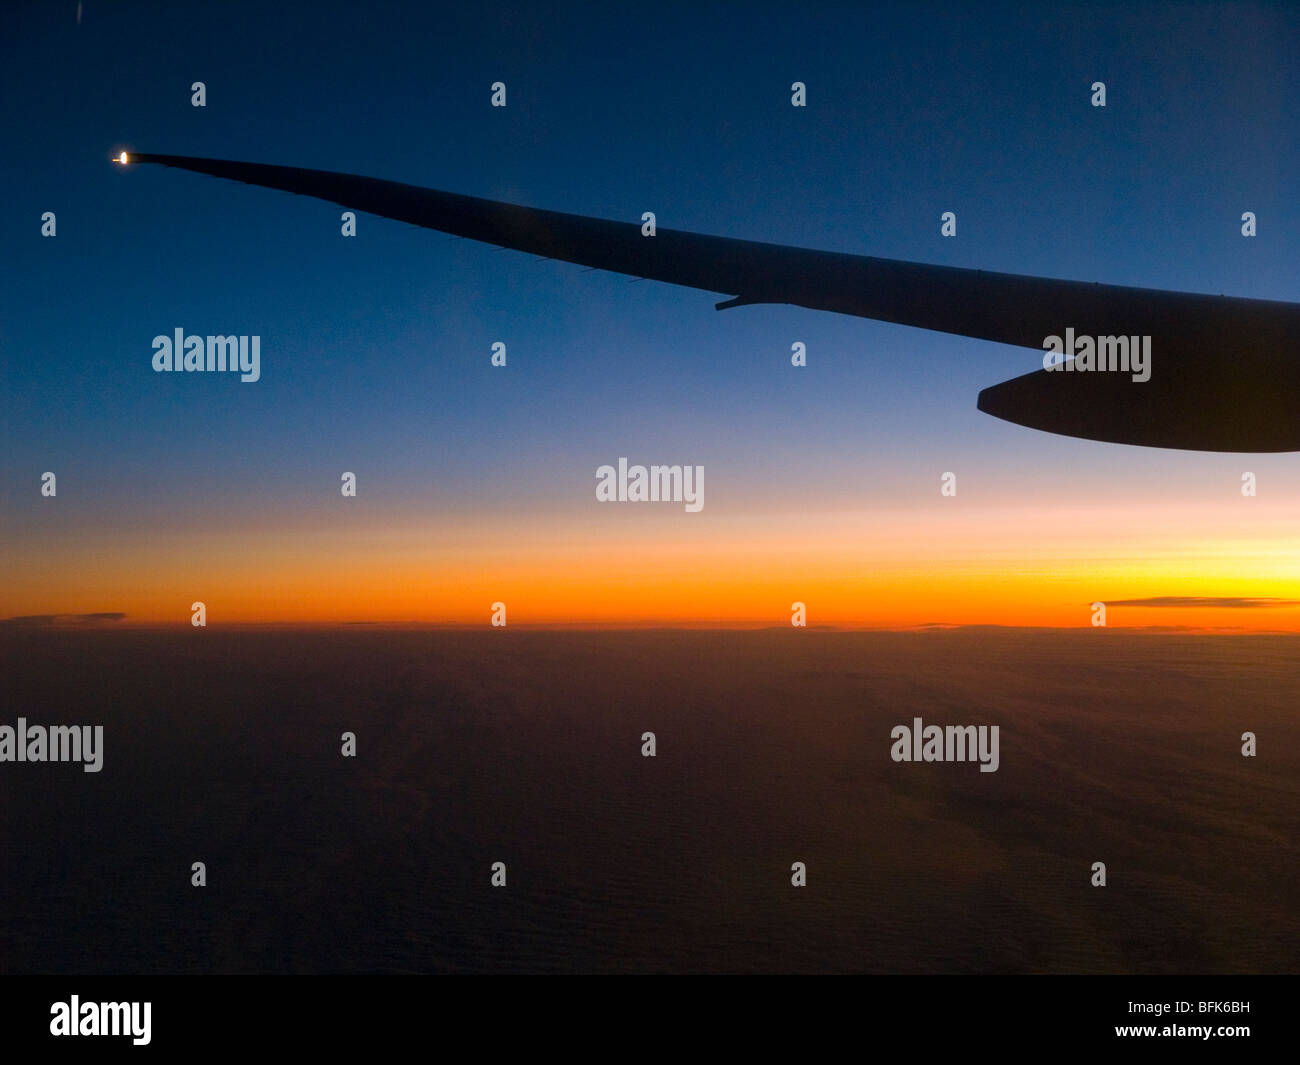 Sunrise viewed from the window of an aeroplane. Stock Photo